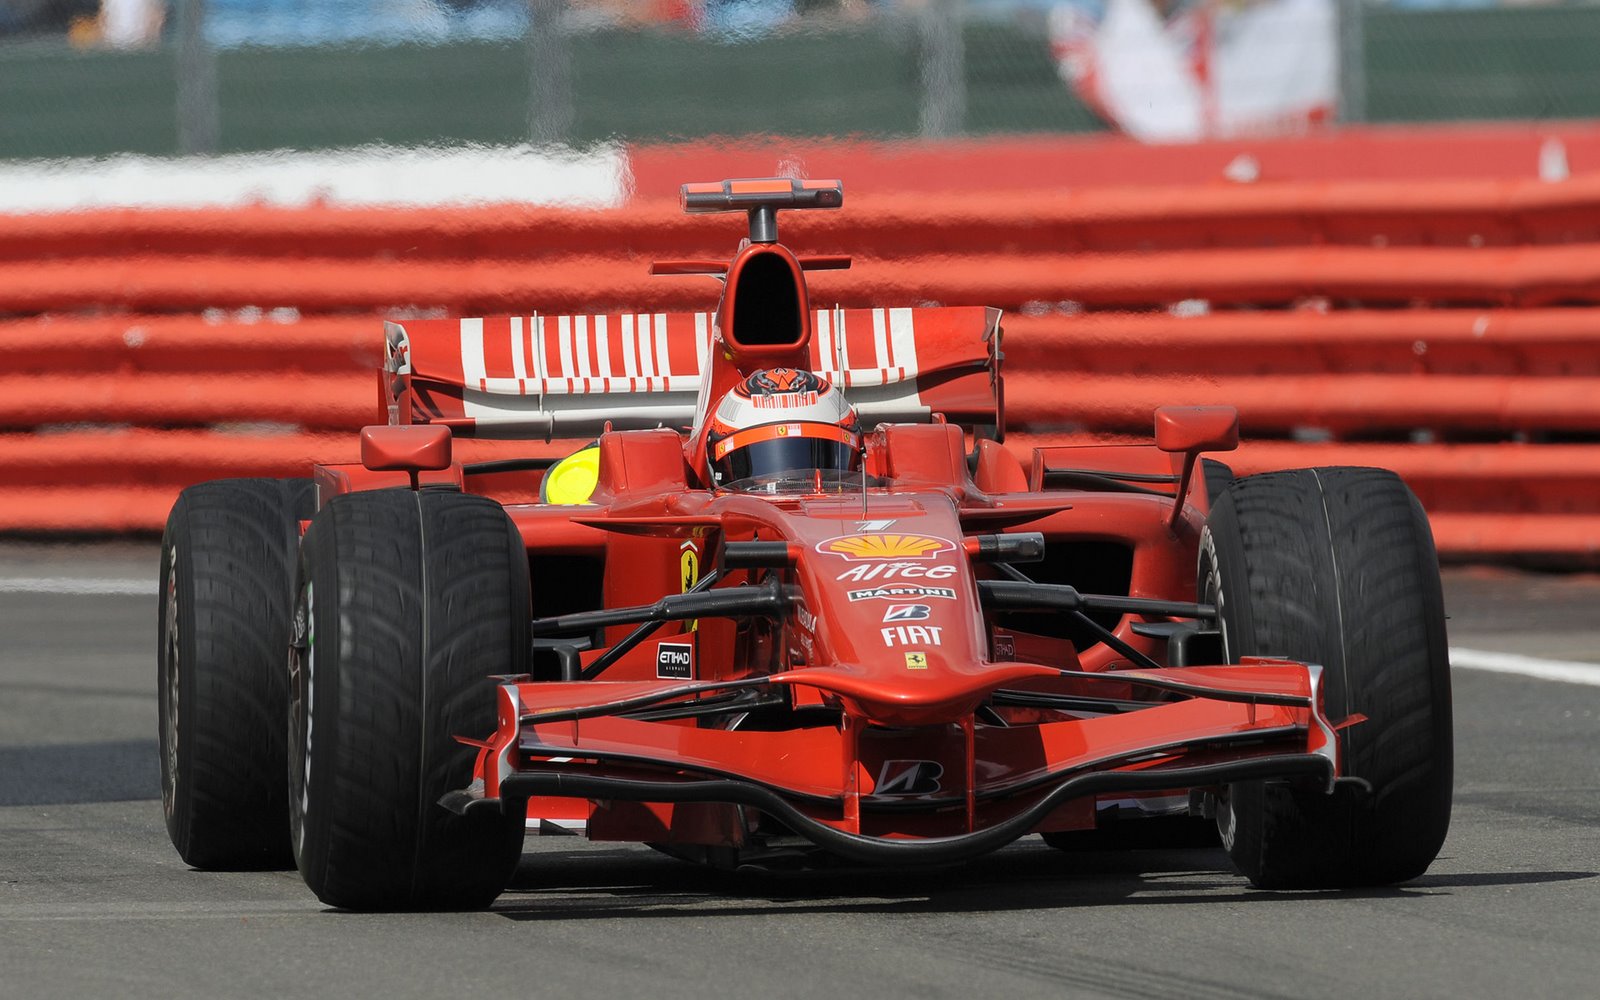 [Kimi+Räikkönen+Ferrari+British+Grand+Prix,+Silverstone+Saturday+Qualification+52.jpg]